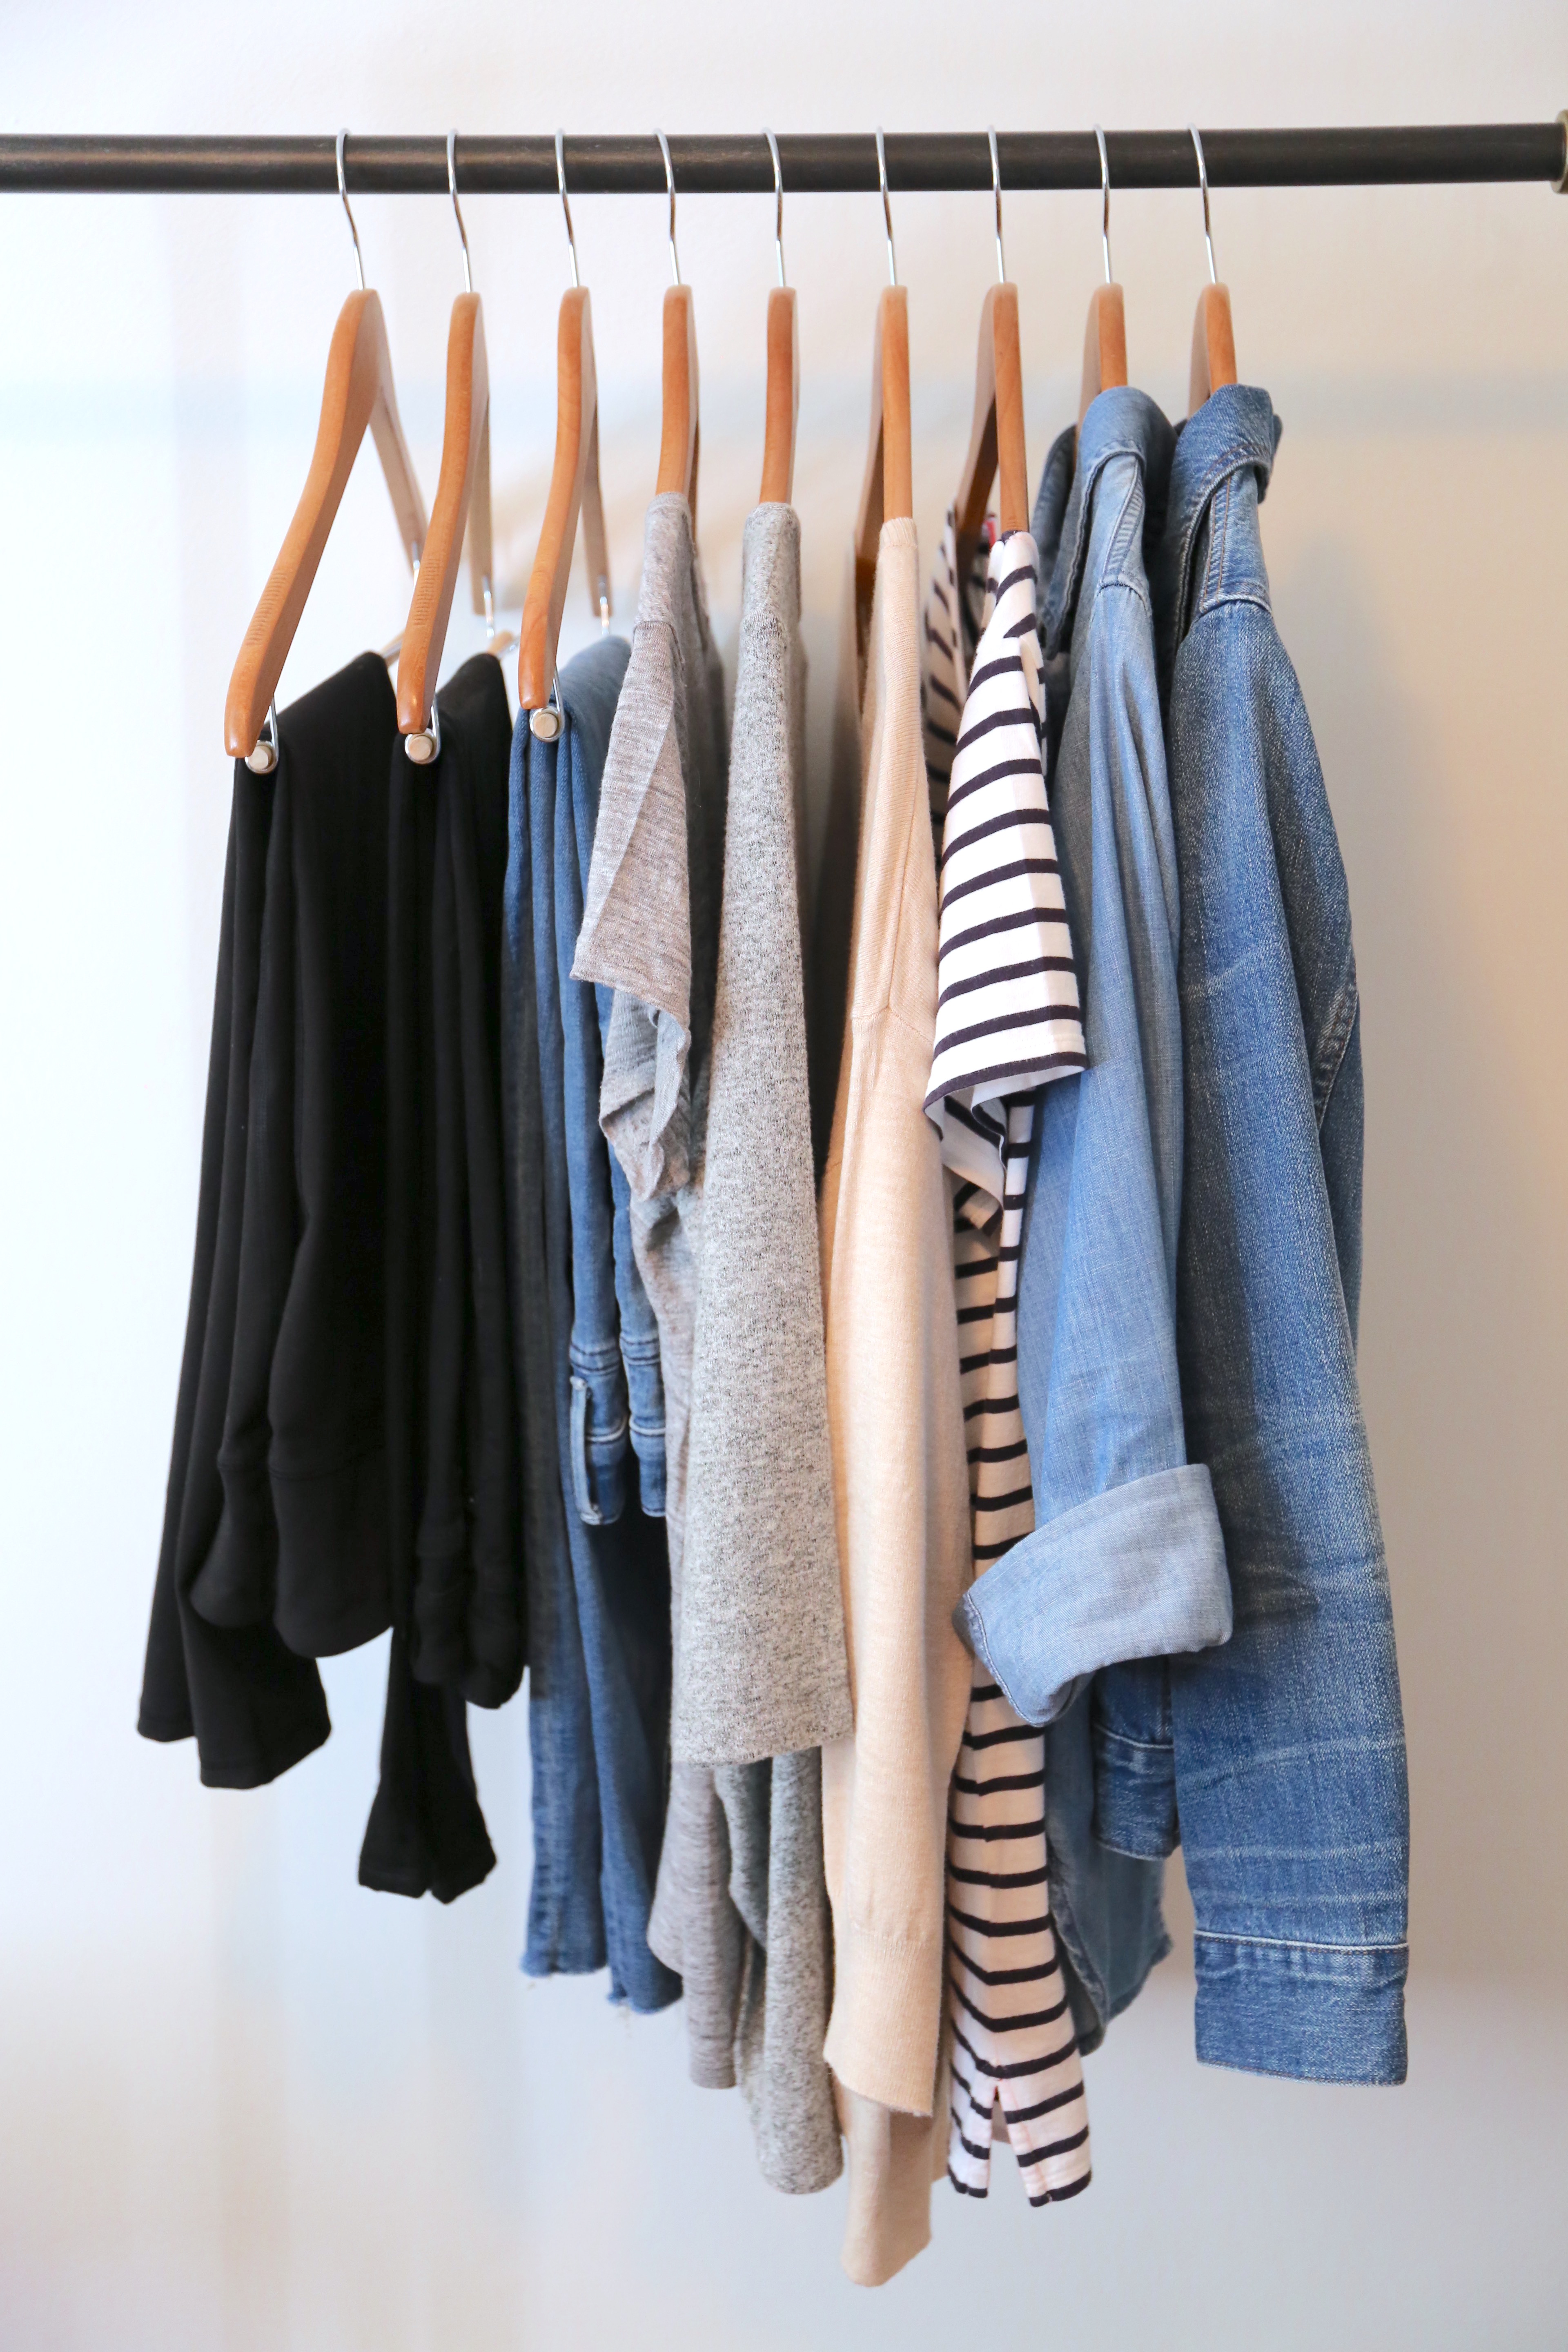 Clothes-Rack